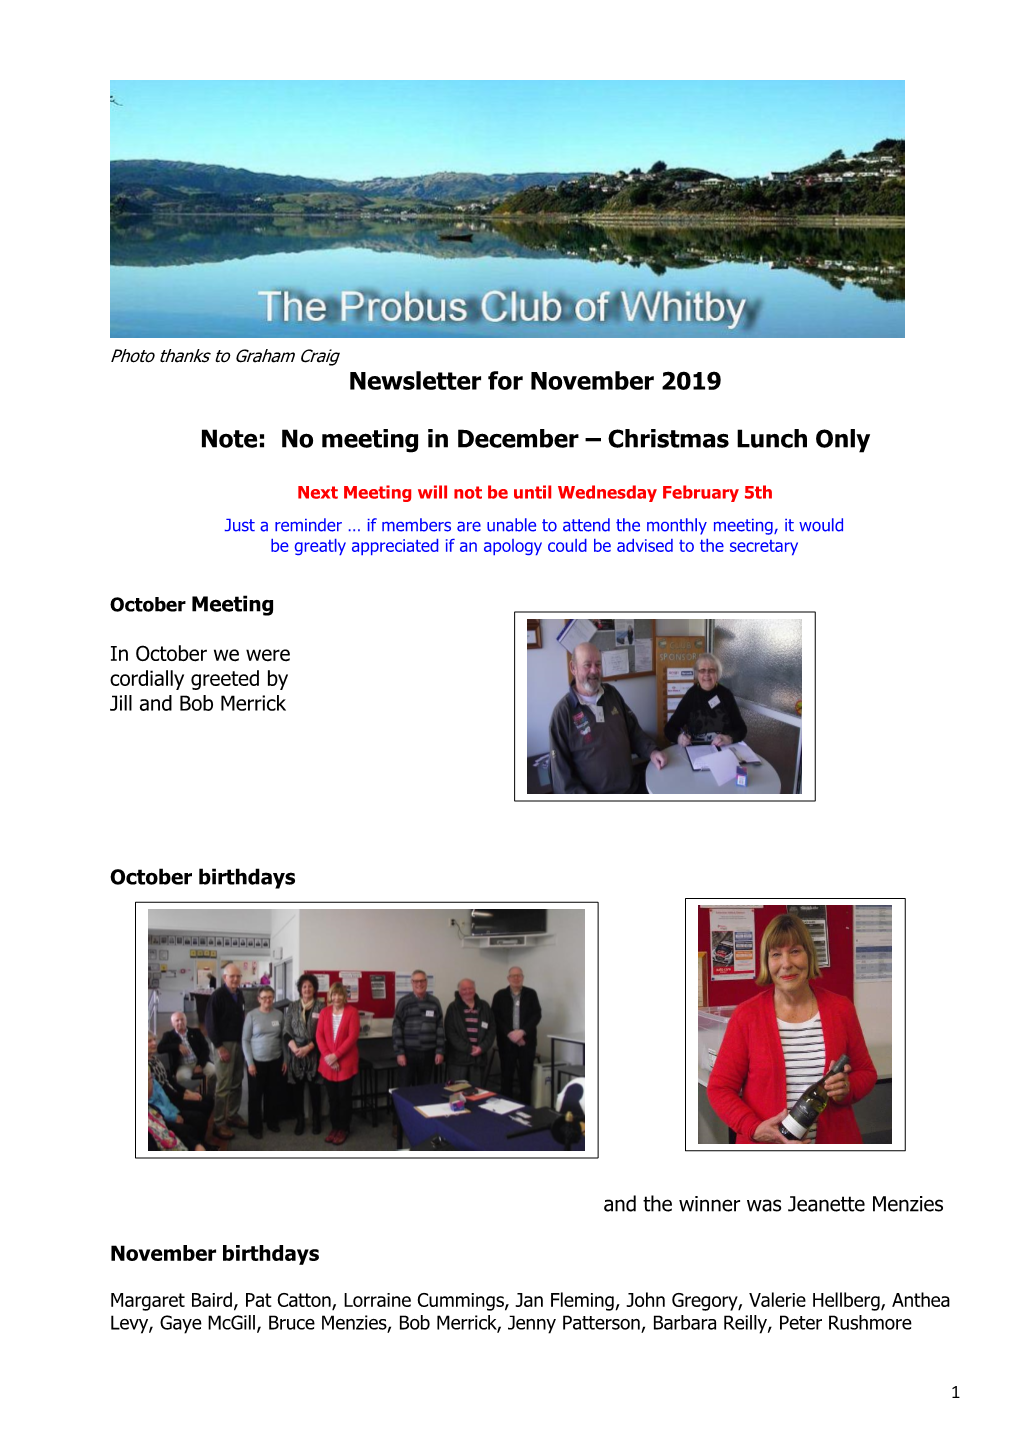 Newsletter for November 2019 Note: No Meeting in December